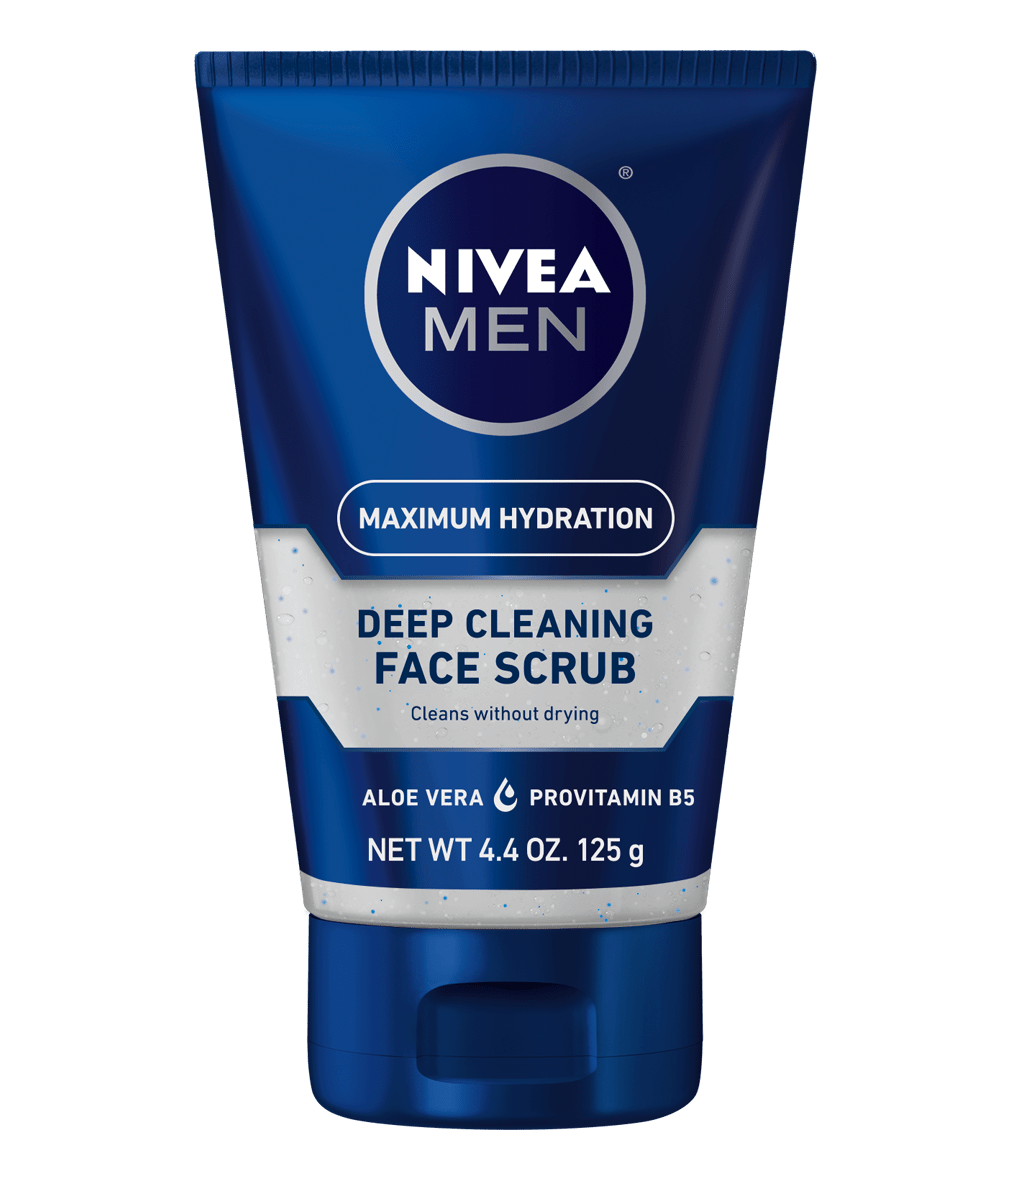 Onvervangbaar Toegeven hulp in de huishouding Maximum Hydration Cleaning Face Scrub | NIVEA MEN®